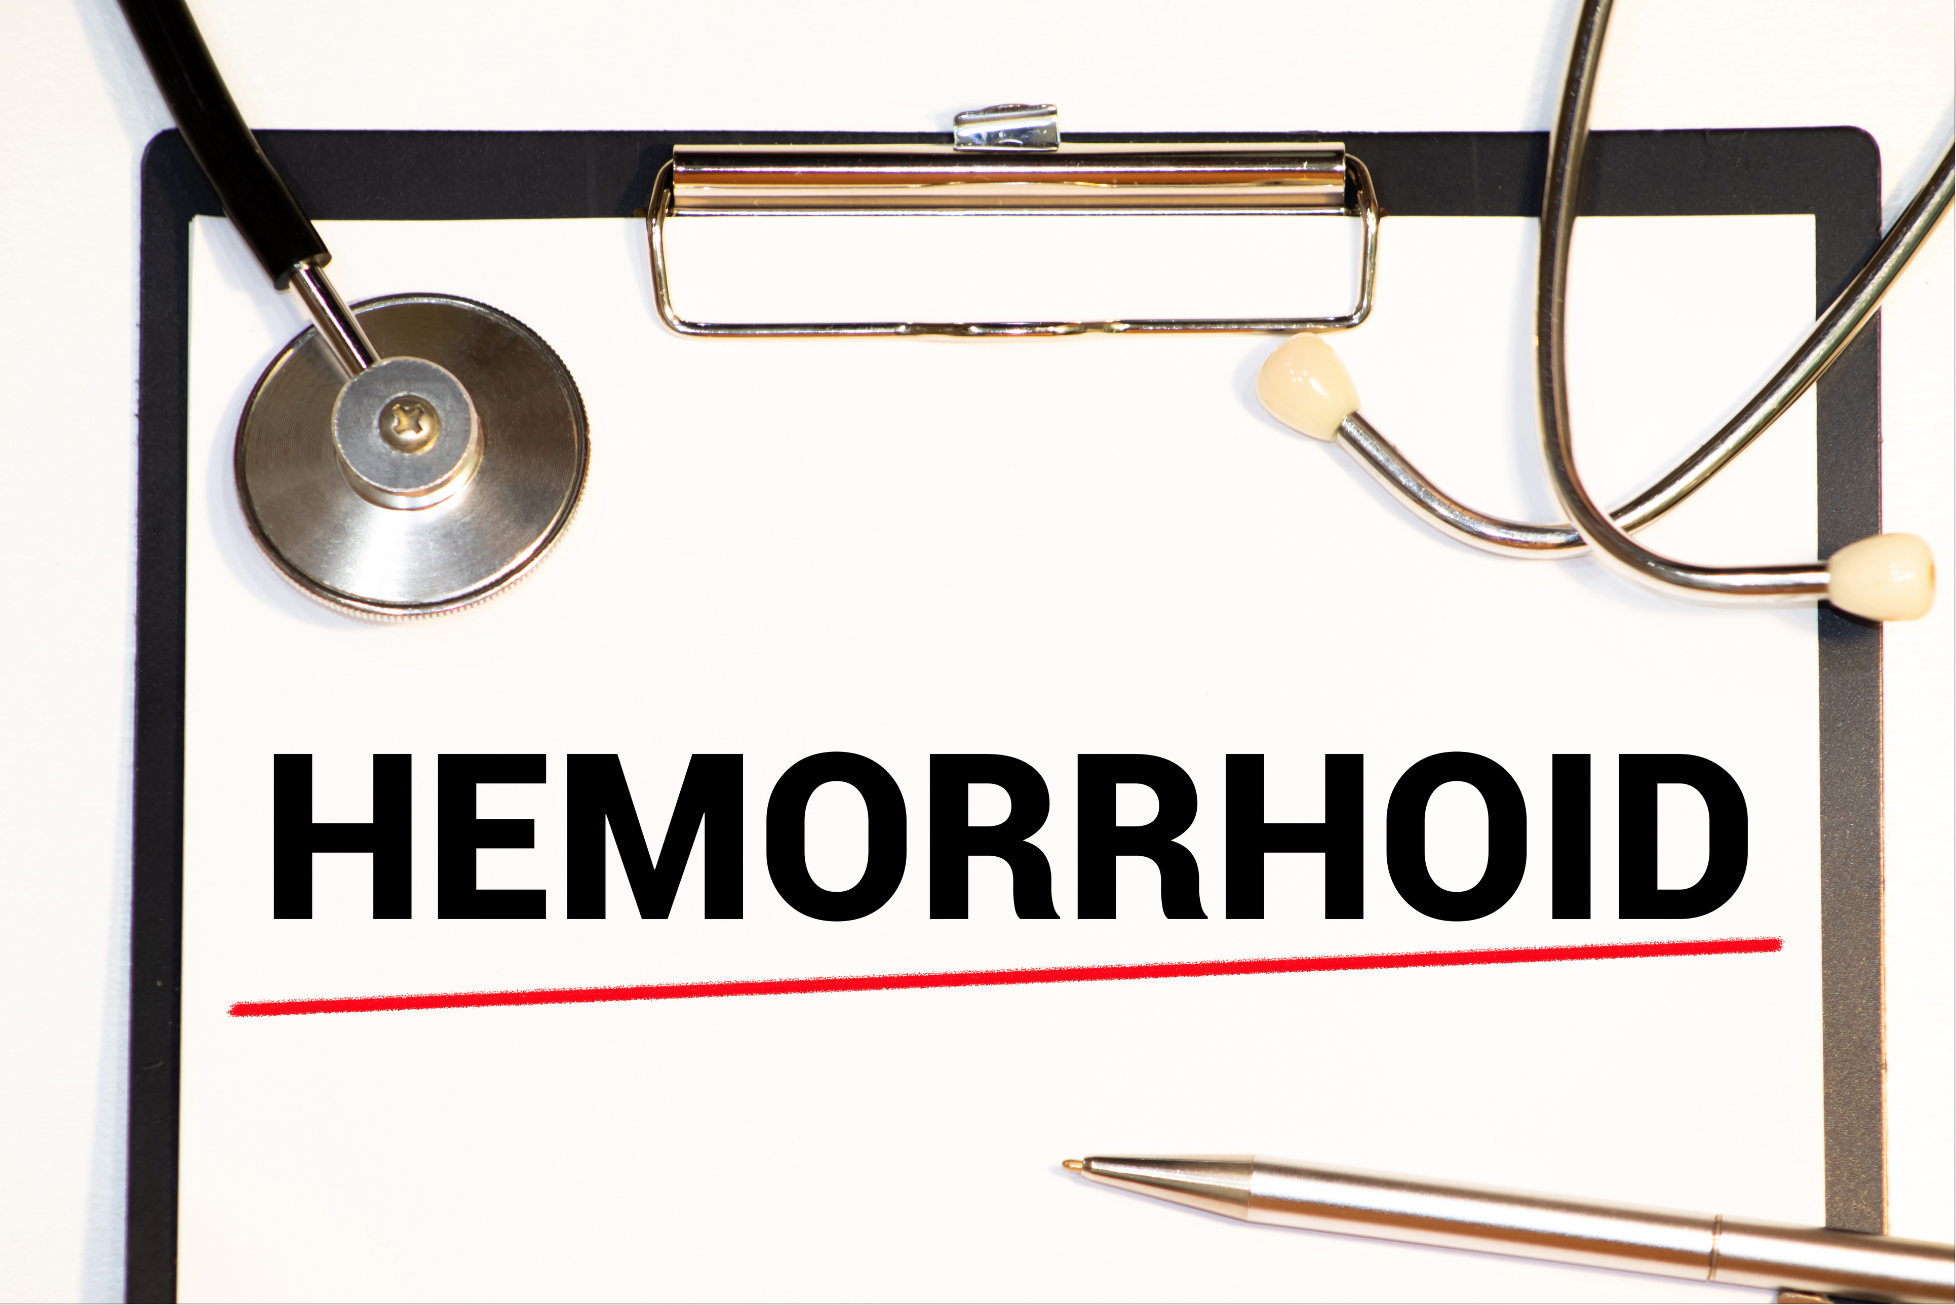 professional hemorrhoid help